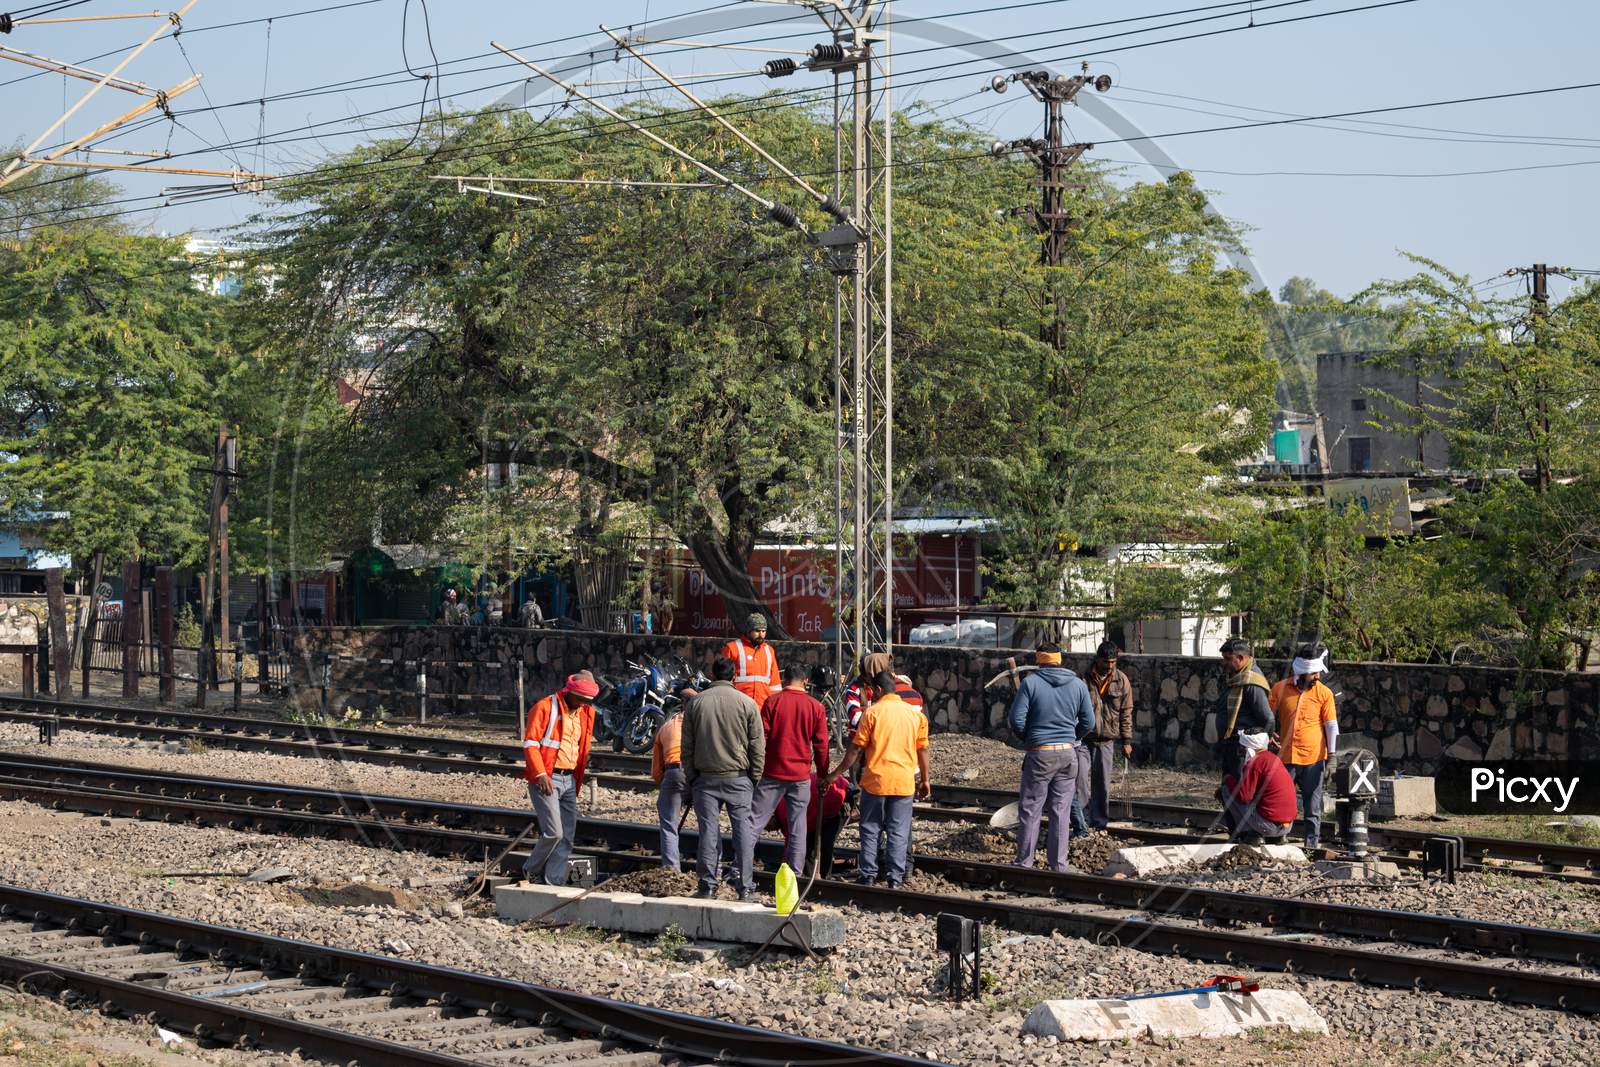 Workers working on railway tracks